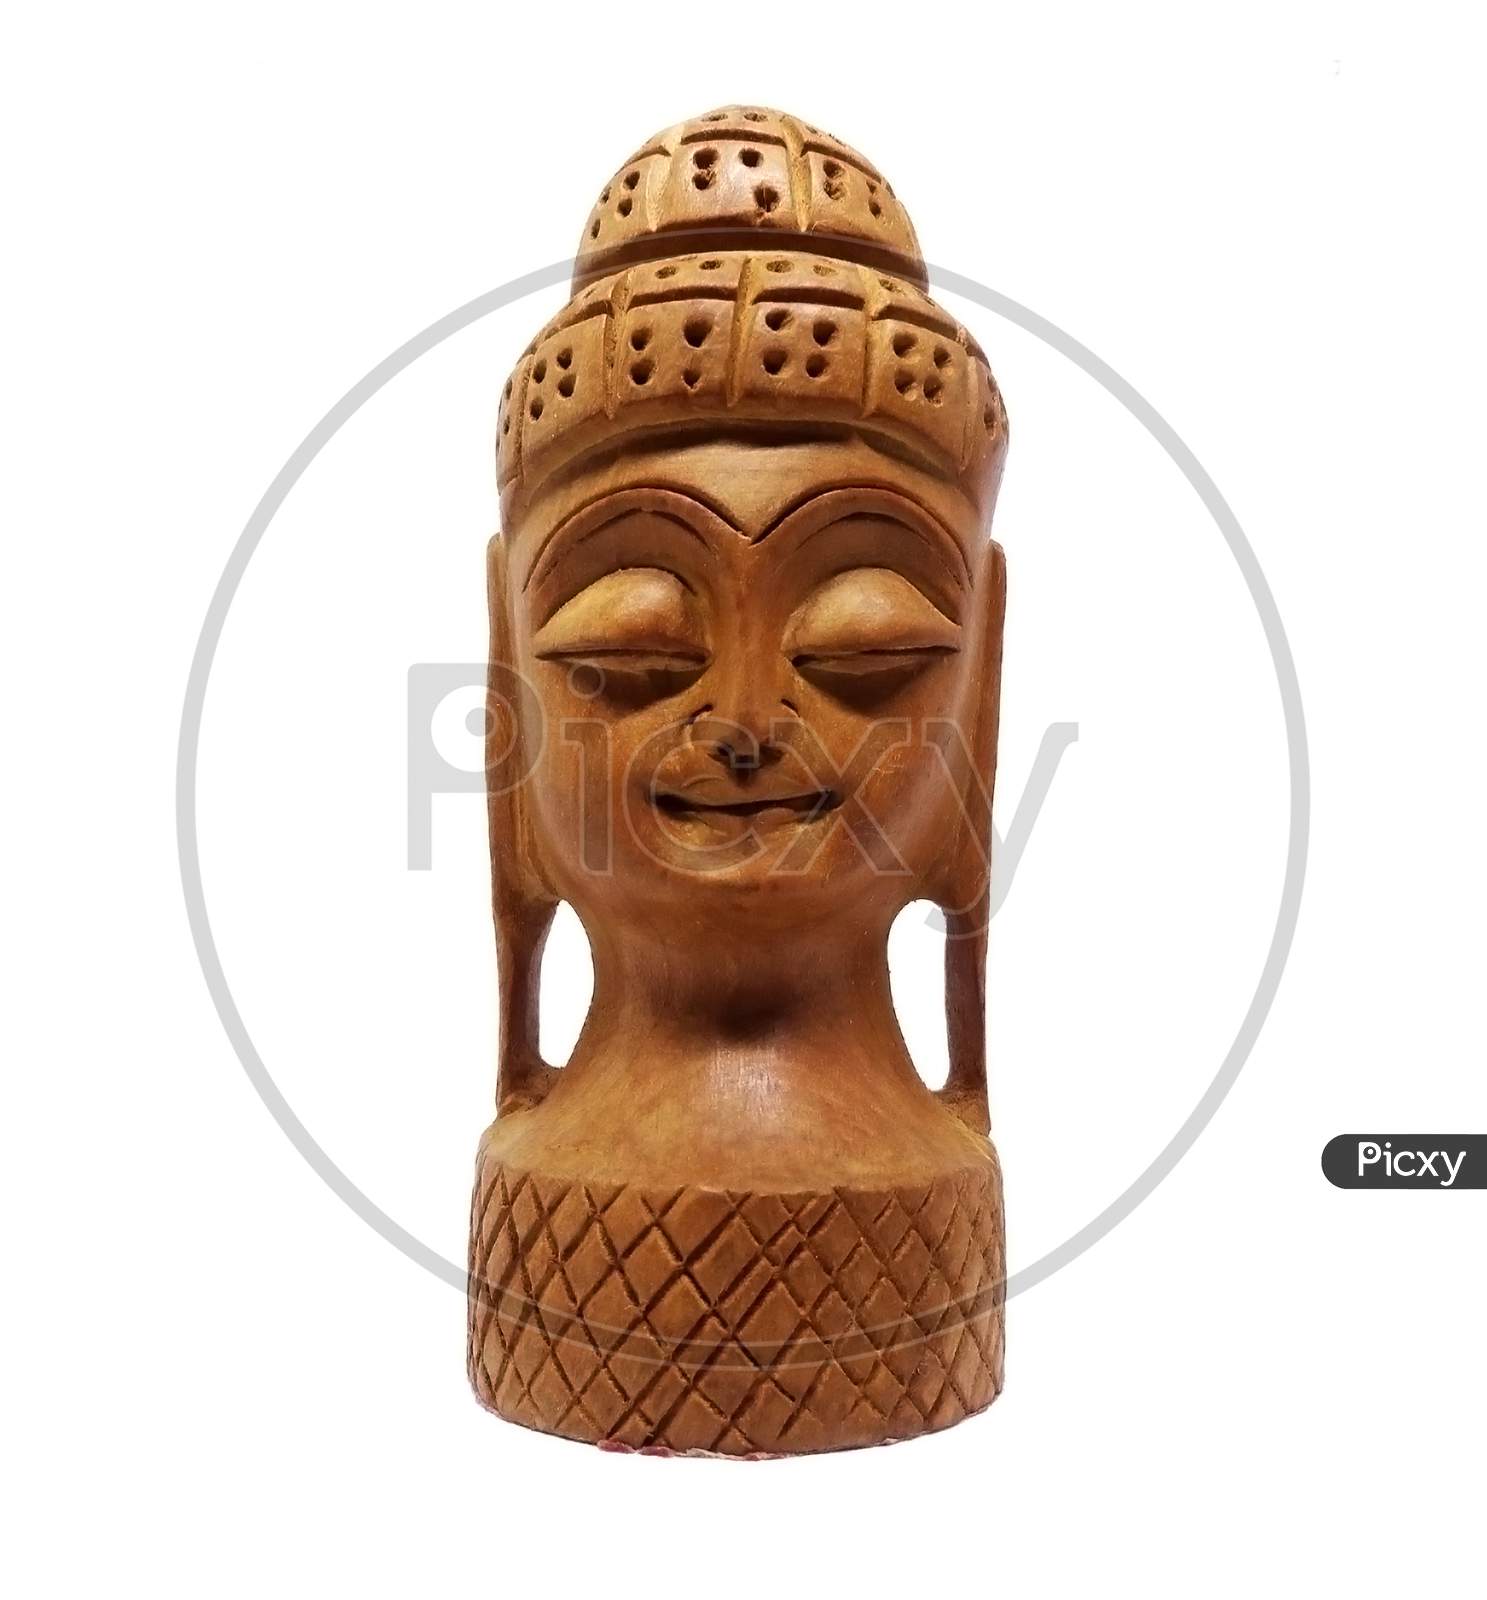 Wooden meditating face statue of lord Gautam Buddha